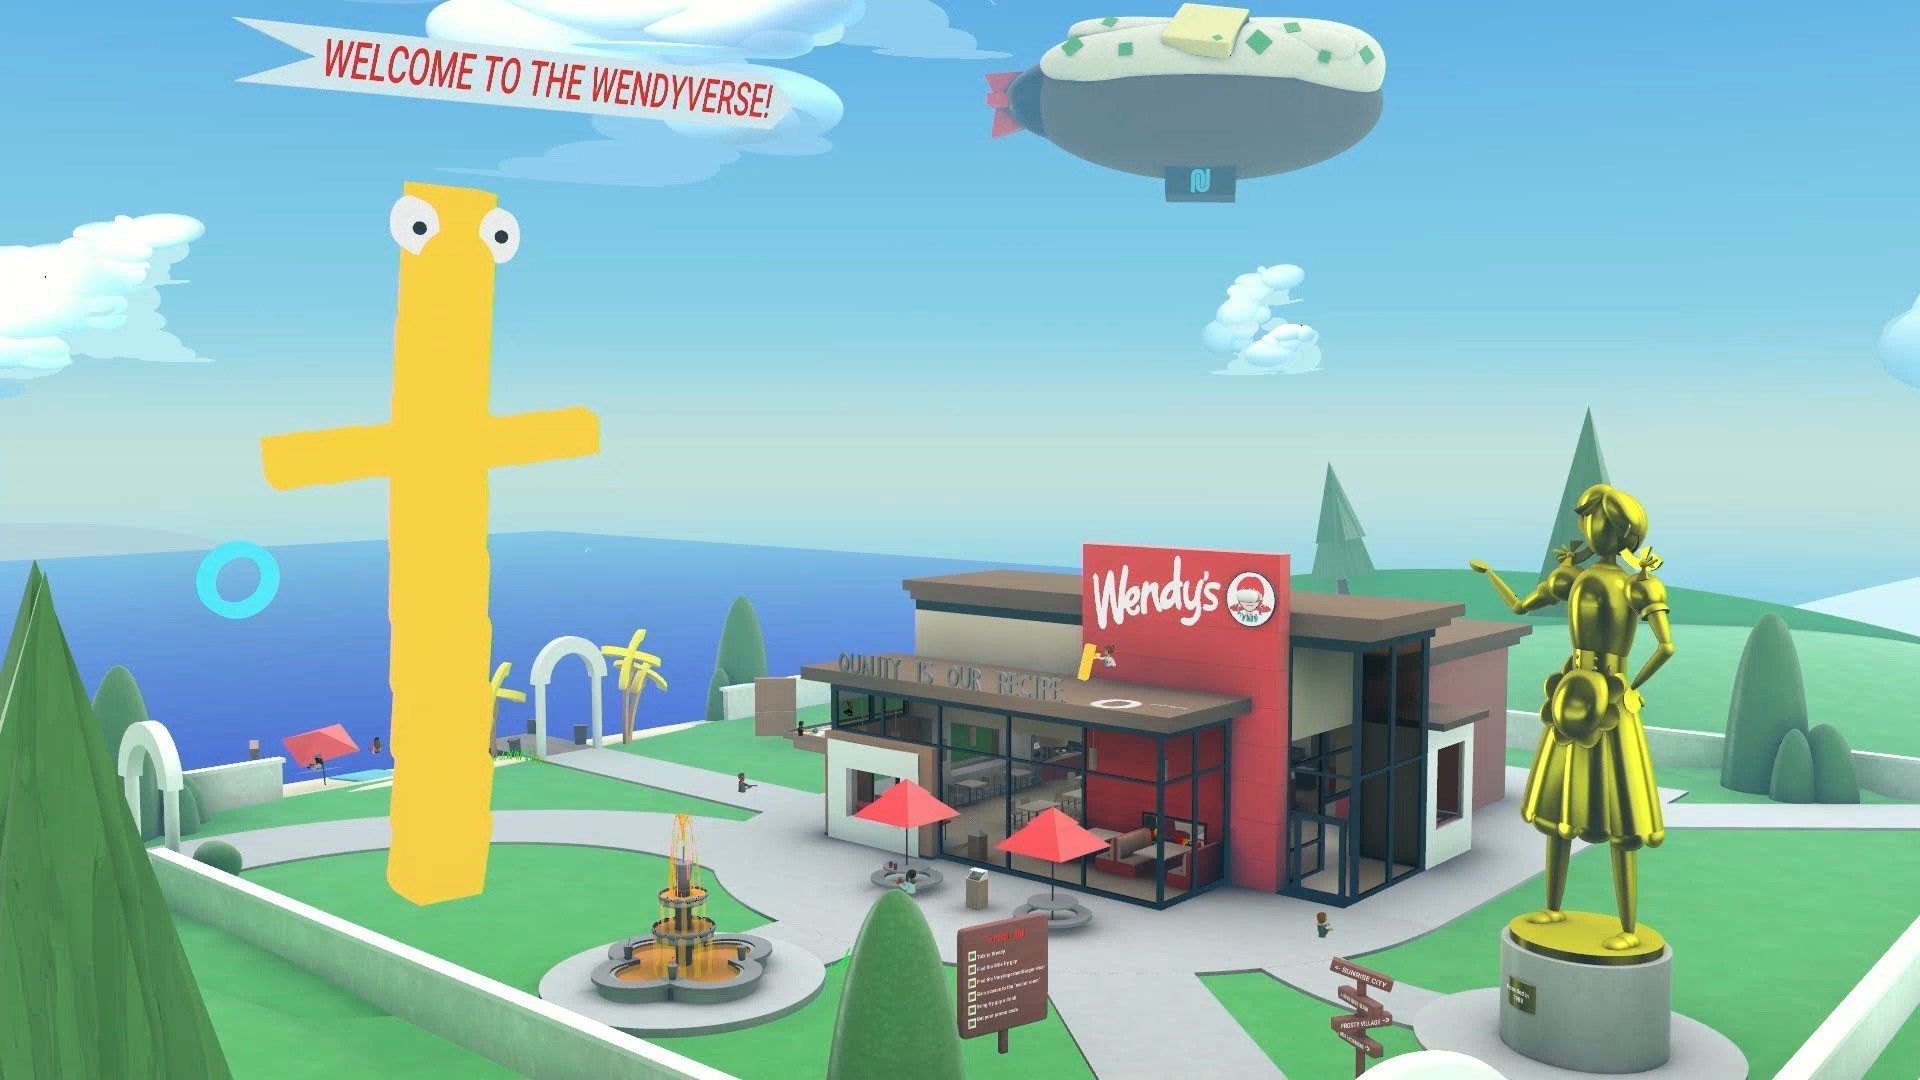 A screenshot of the Wendyverse virtual restaurant